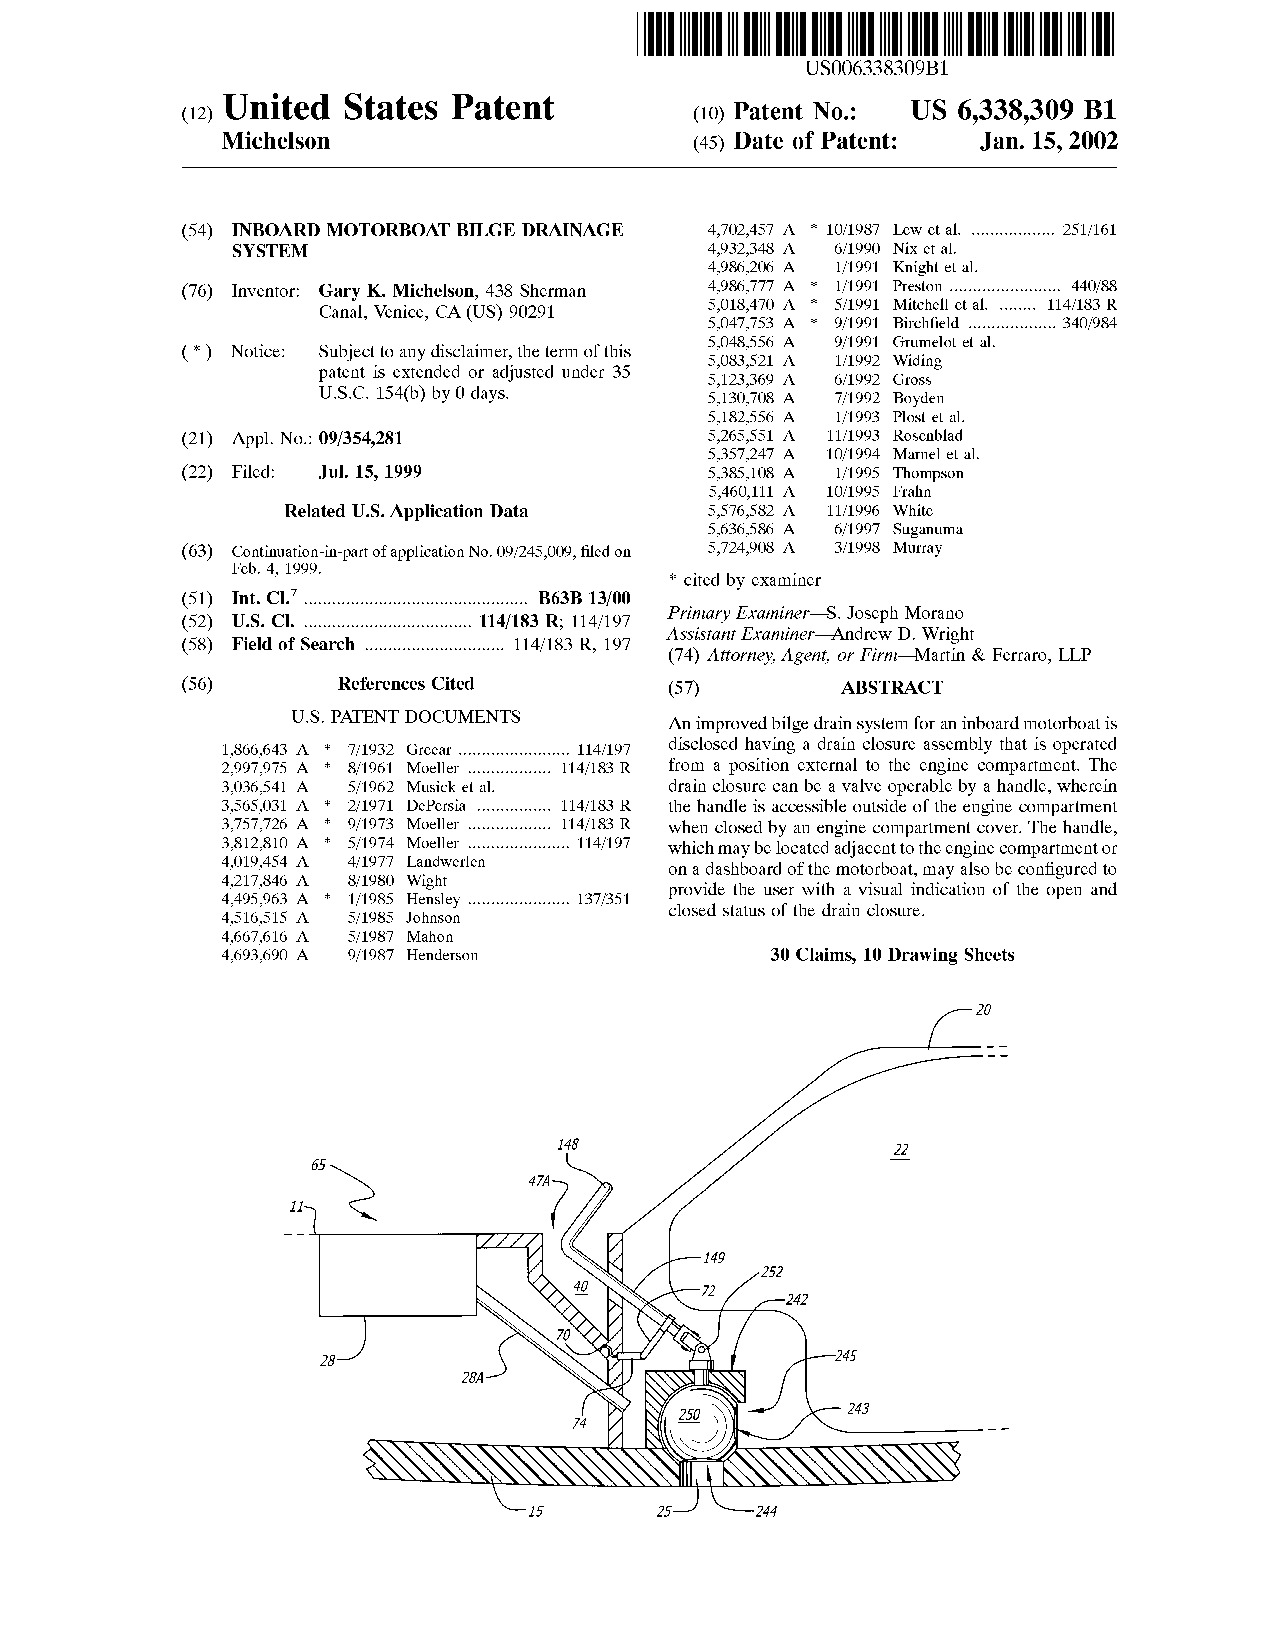 Inboard motorboat bilge drainage system - Patent 6,338,309